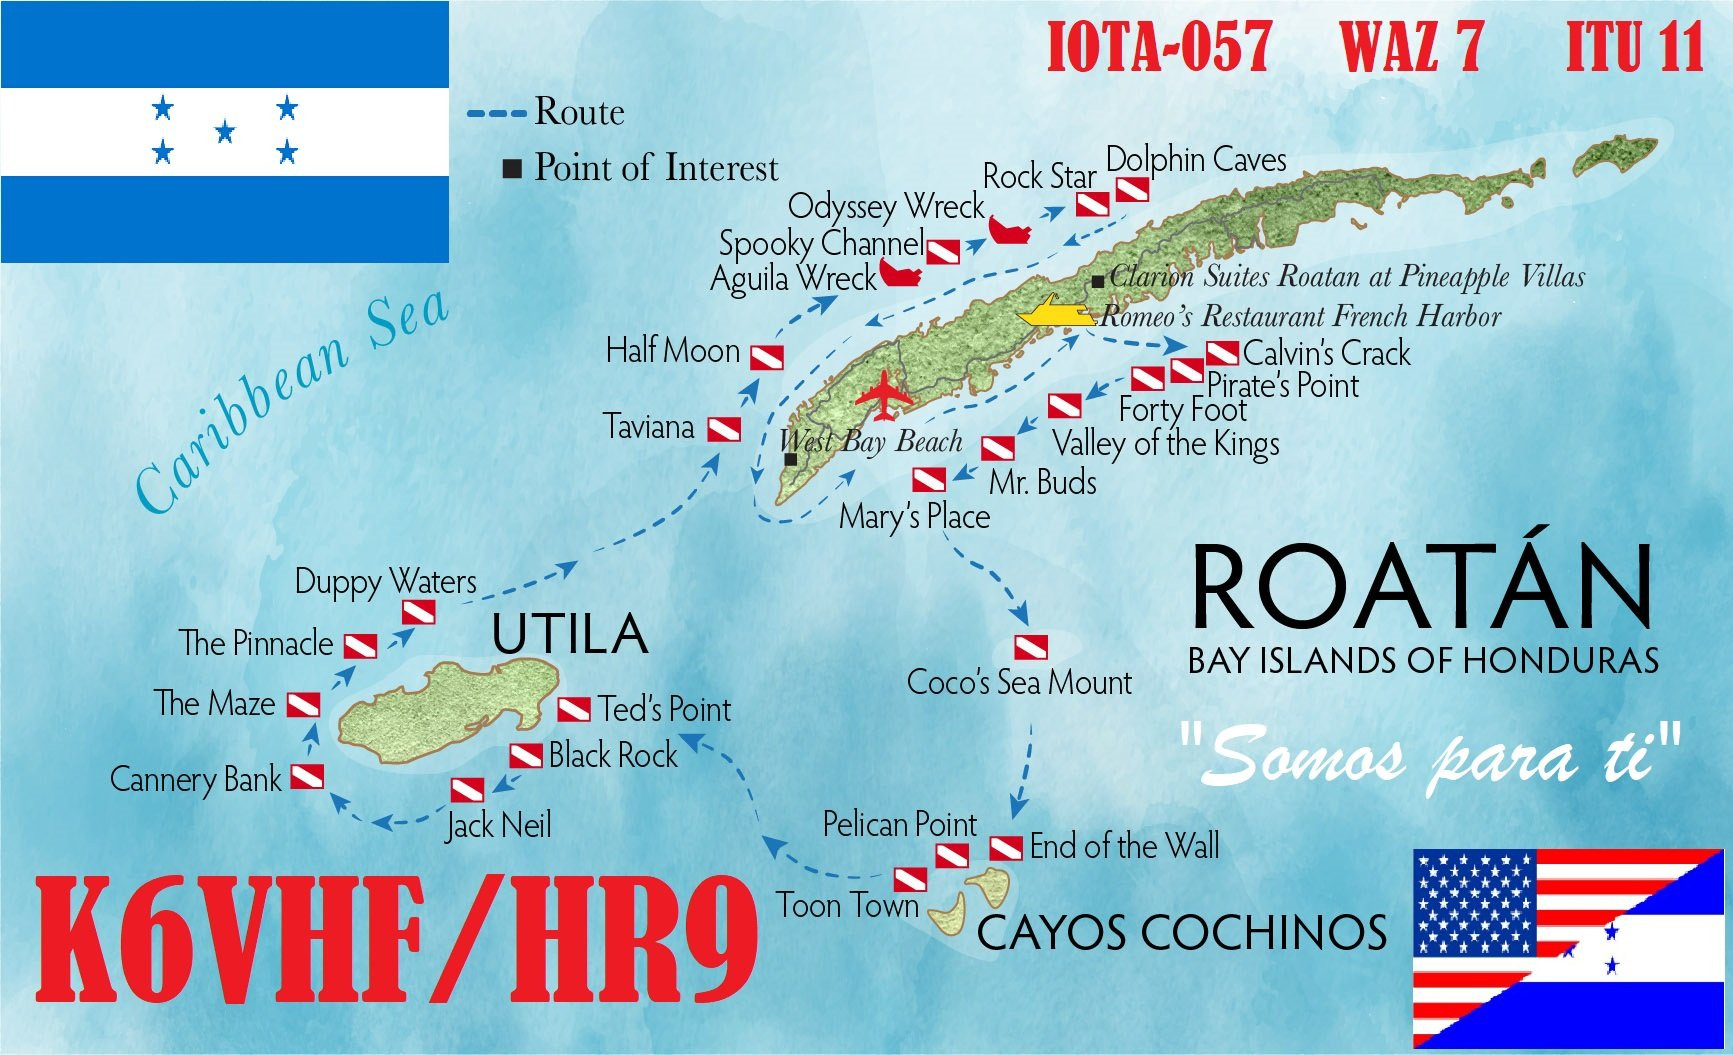 HR9/K6VHF Roatan Island, Honduras